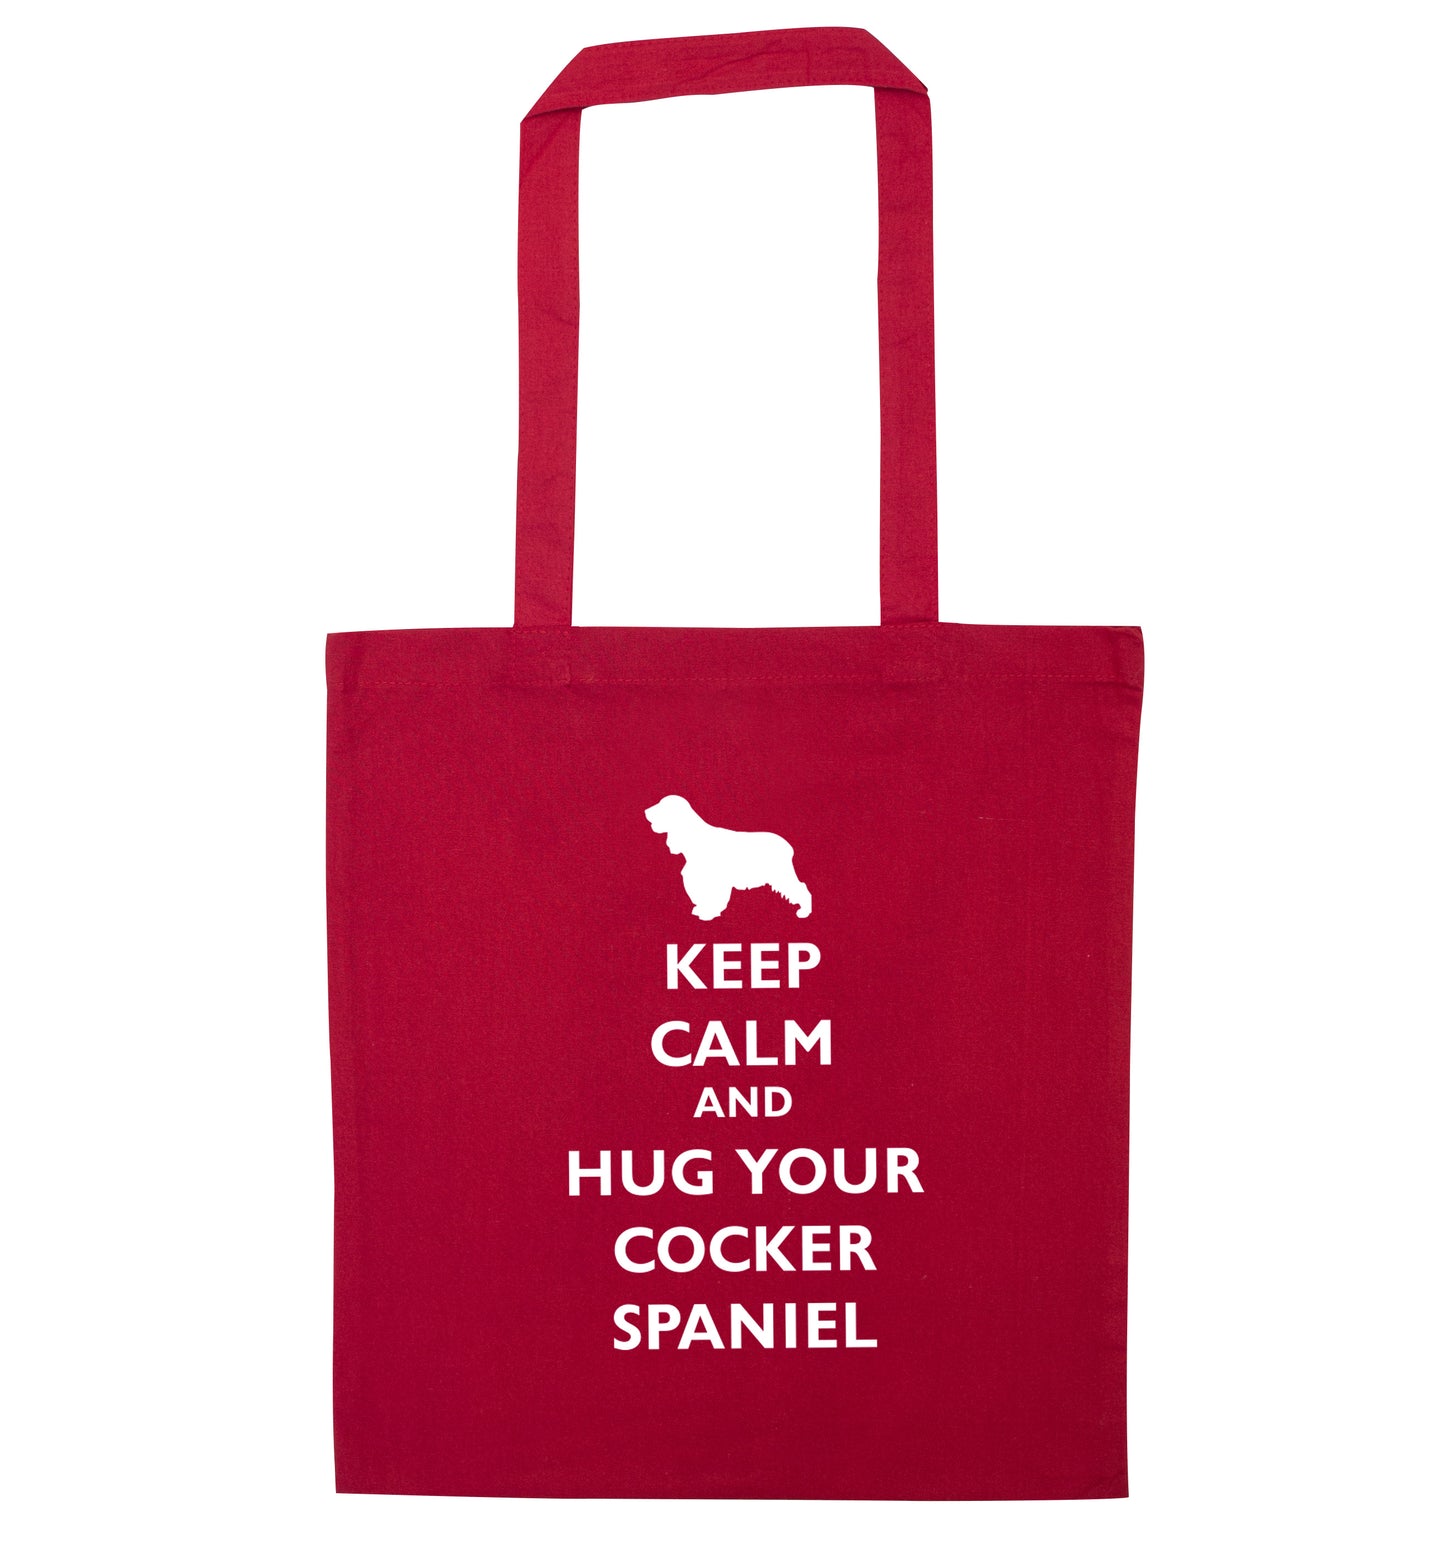 Keep calm and hug your cocker spaniel red tote bag